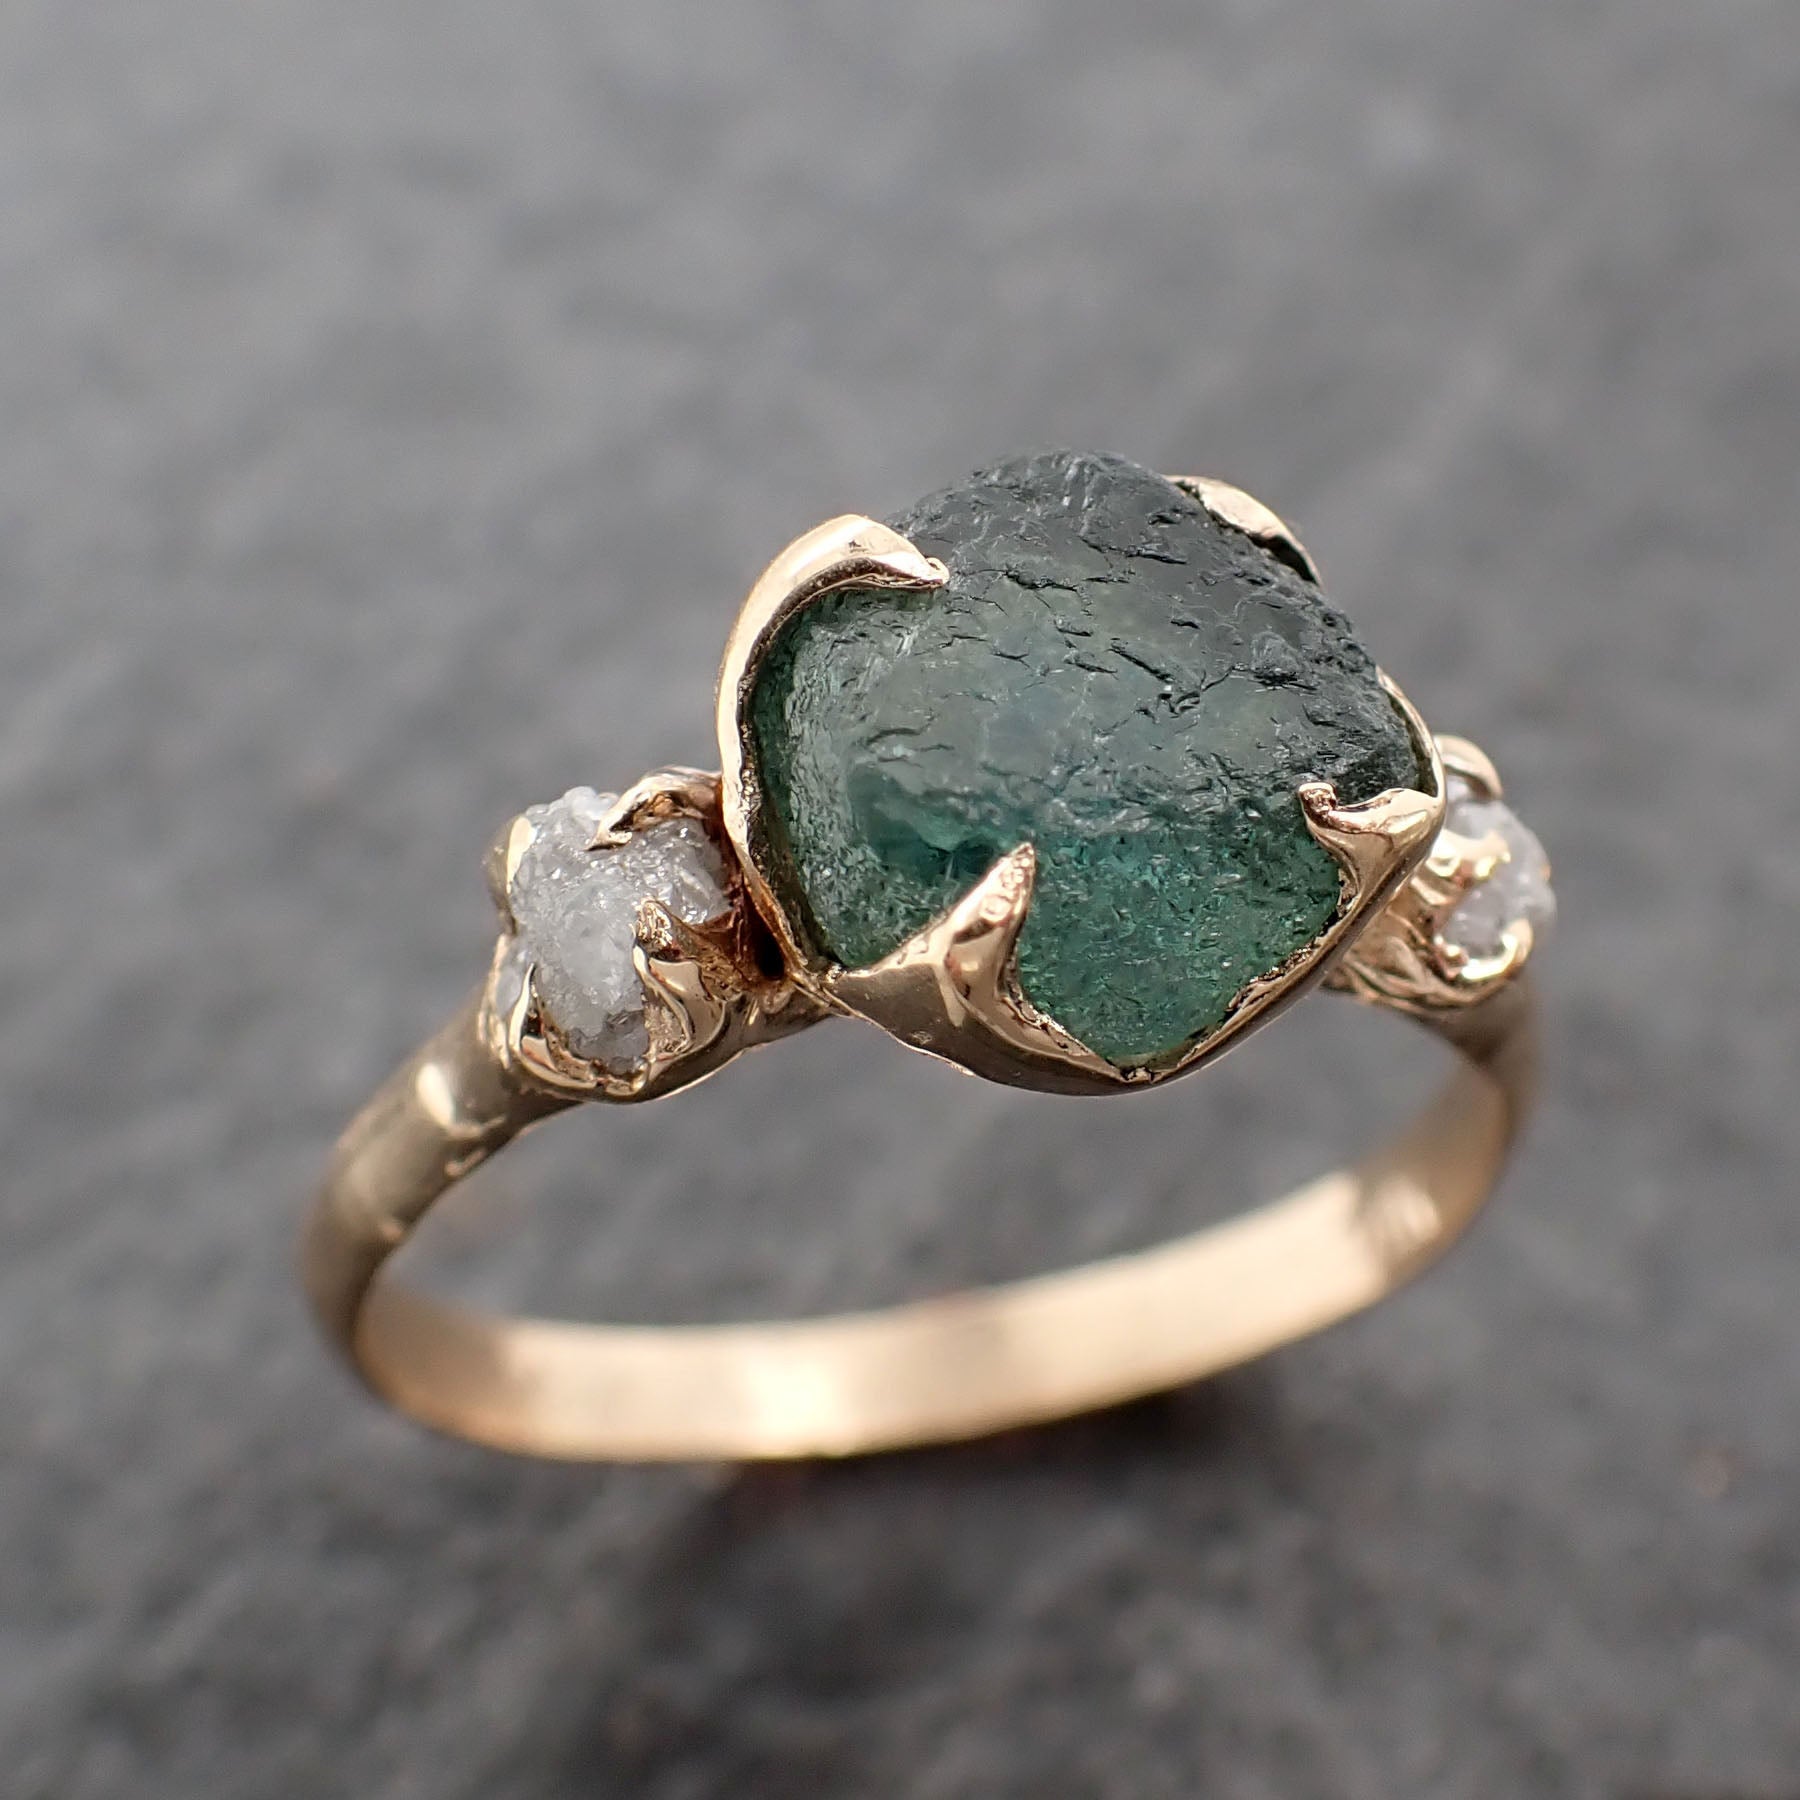 raw montana sapphire diamond yellow gold engagement wedding ring custom one of a kind gemstone multi stone ring 2555 Alternative Engagement